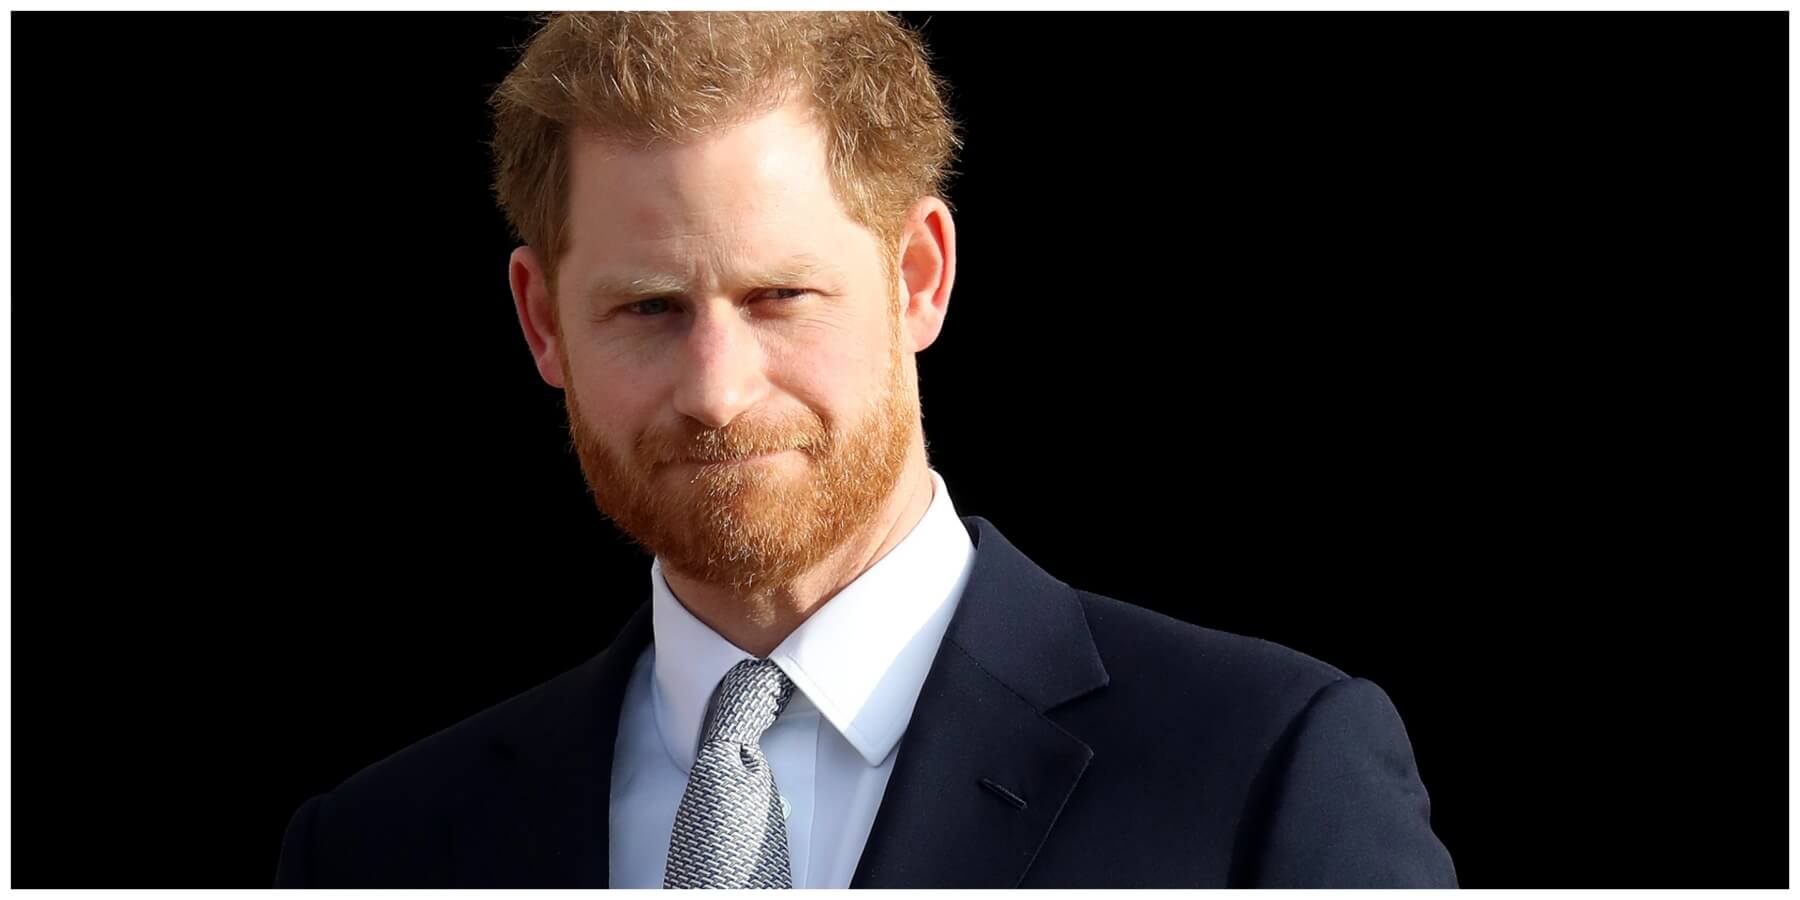 Prince Harry photographed at Buckingham Palace on January 16, 2020